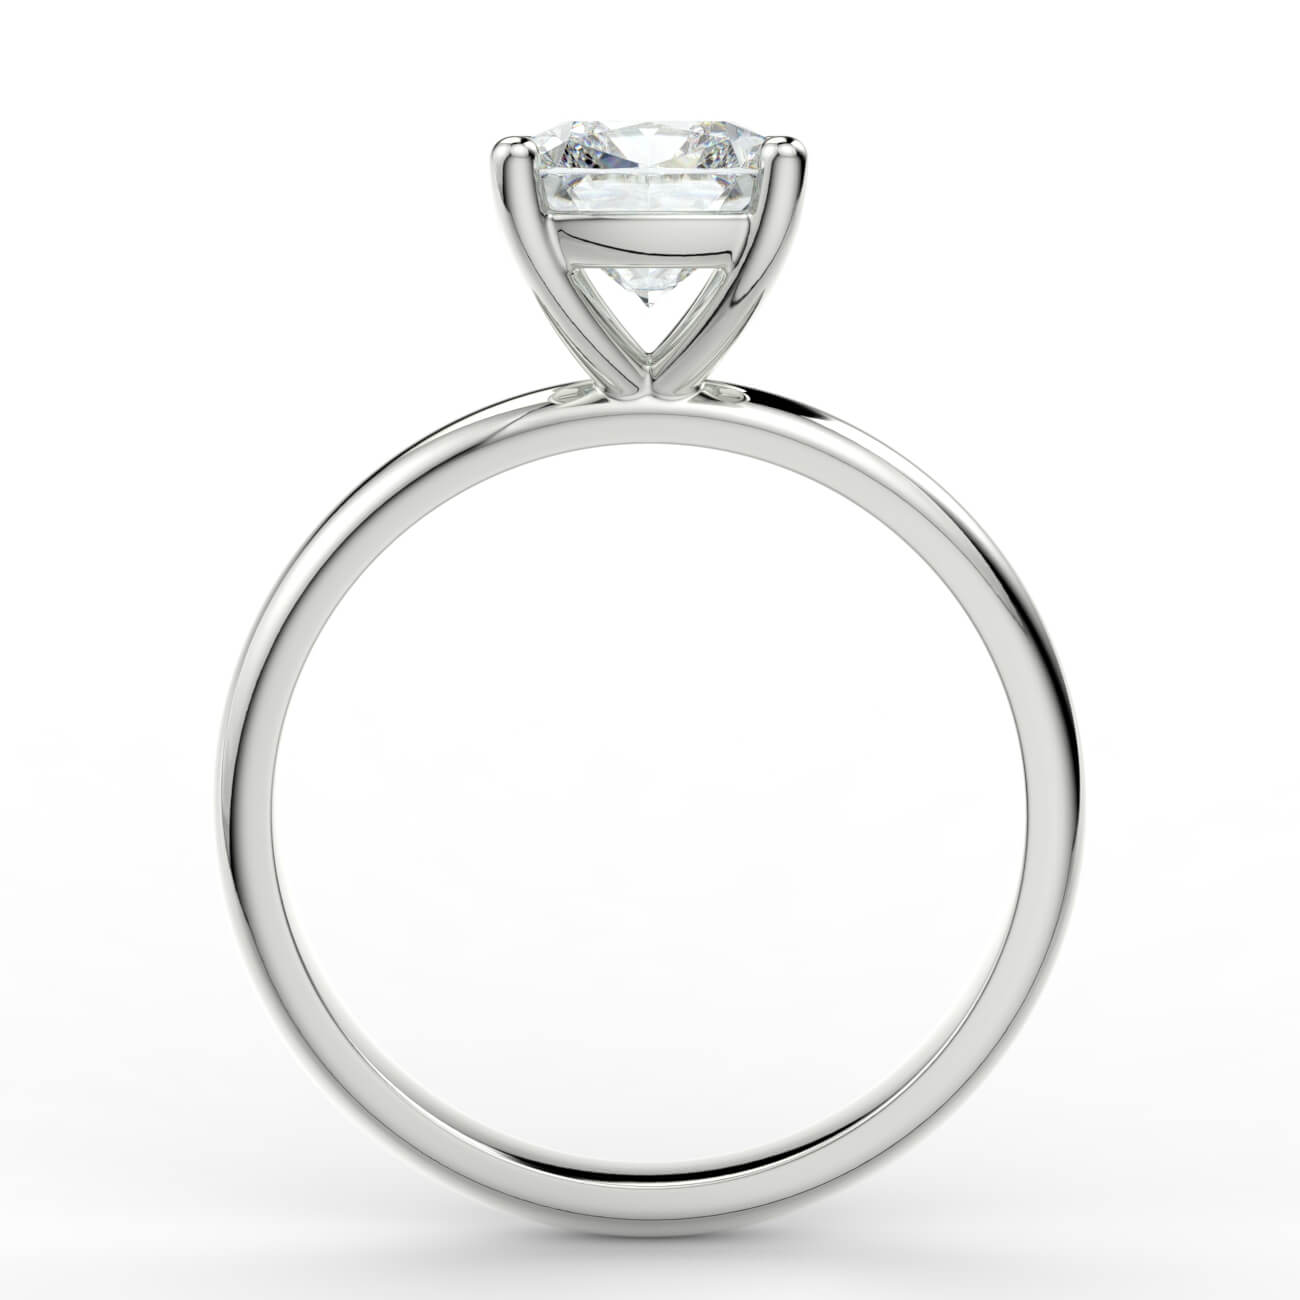 Solitaire cushion cut diamond engagement ring in white gold – Australian Diamond Network